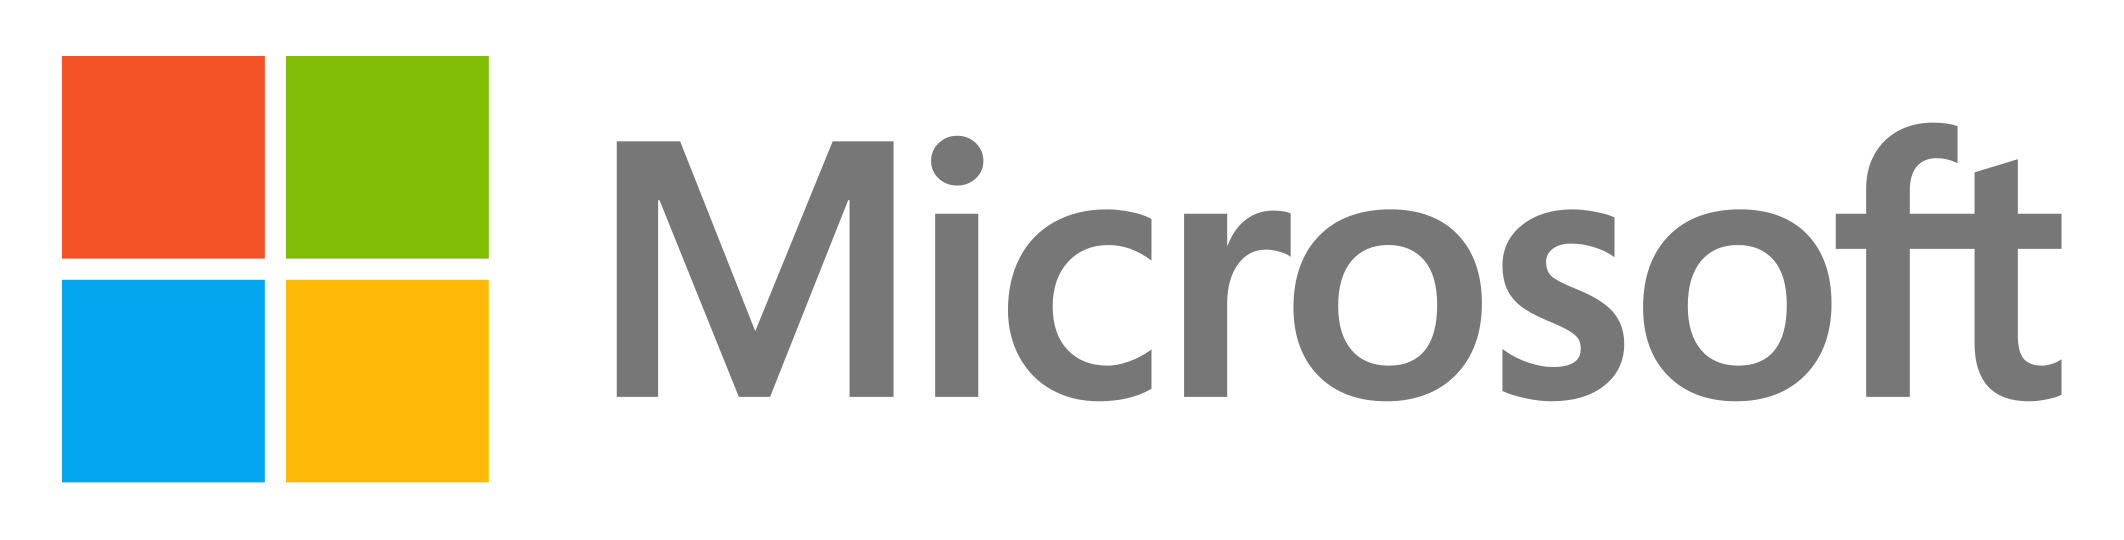 logo_microsoft.png